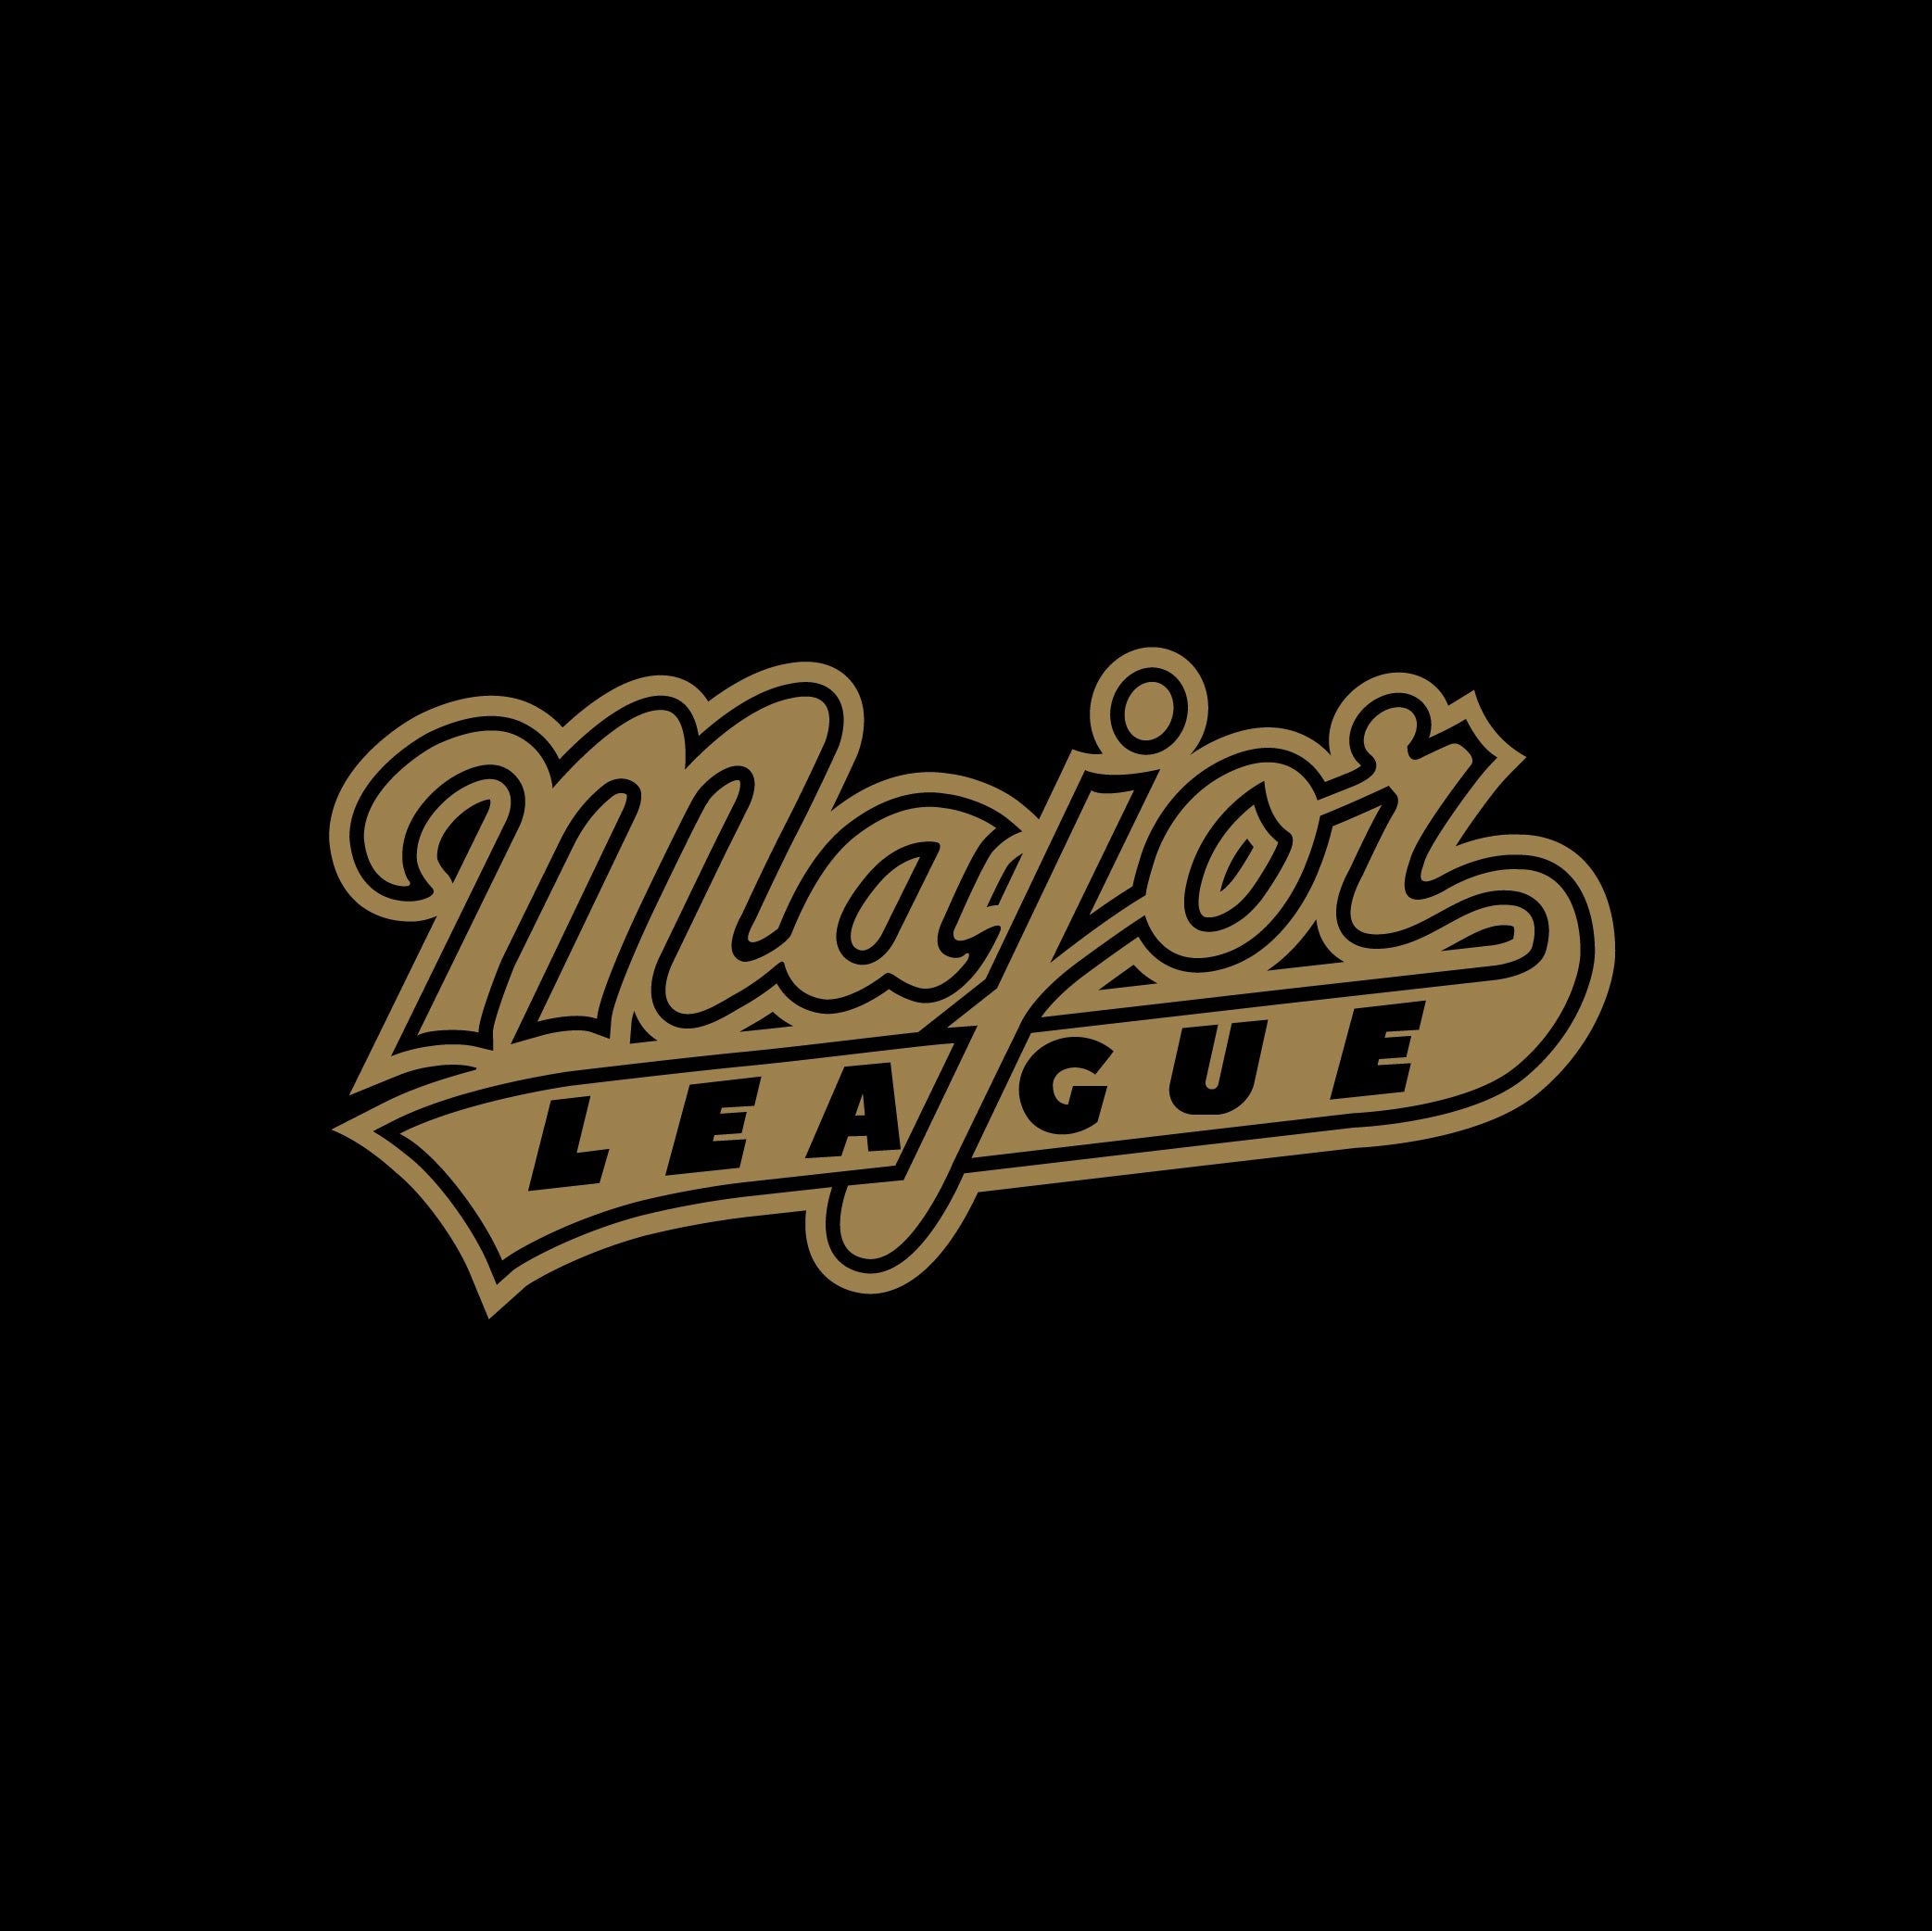 Major League Navy T-Shirt | Baseballism x Major League Collection XLarge